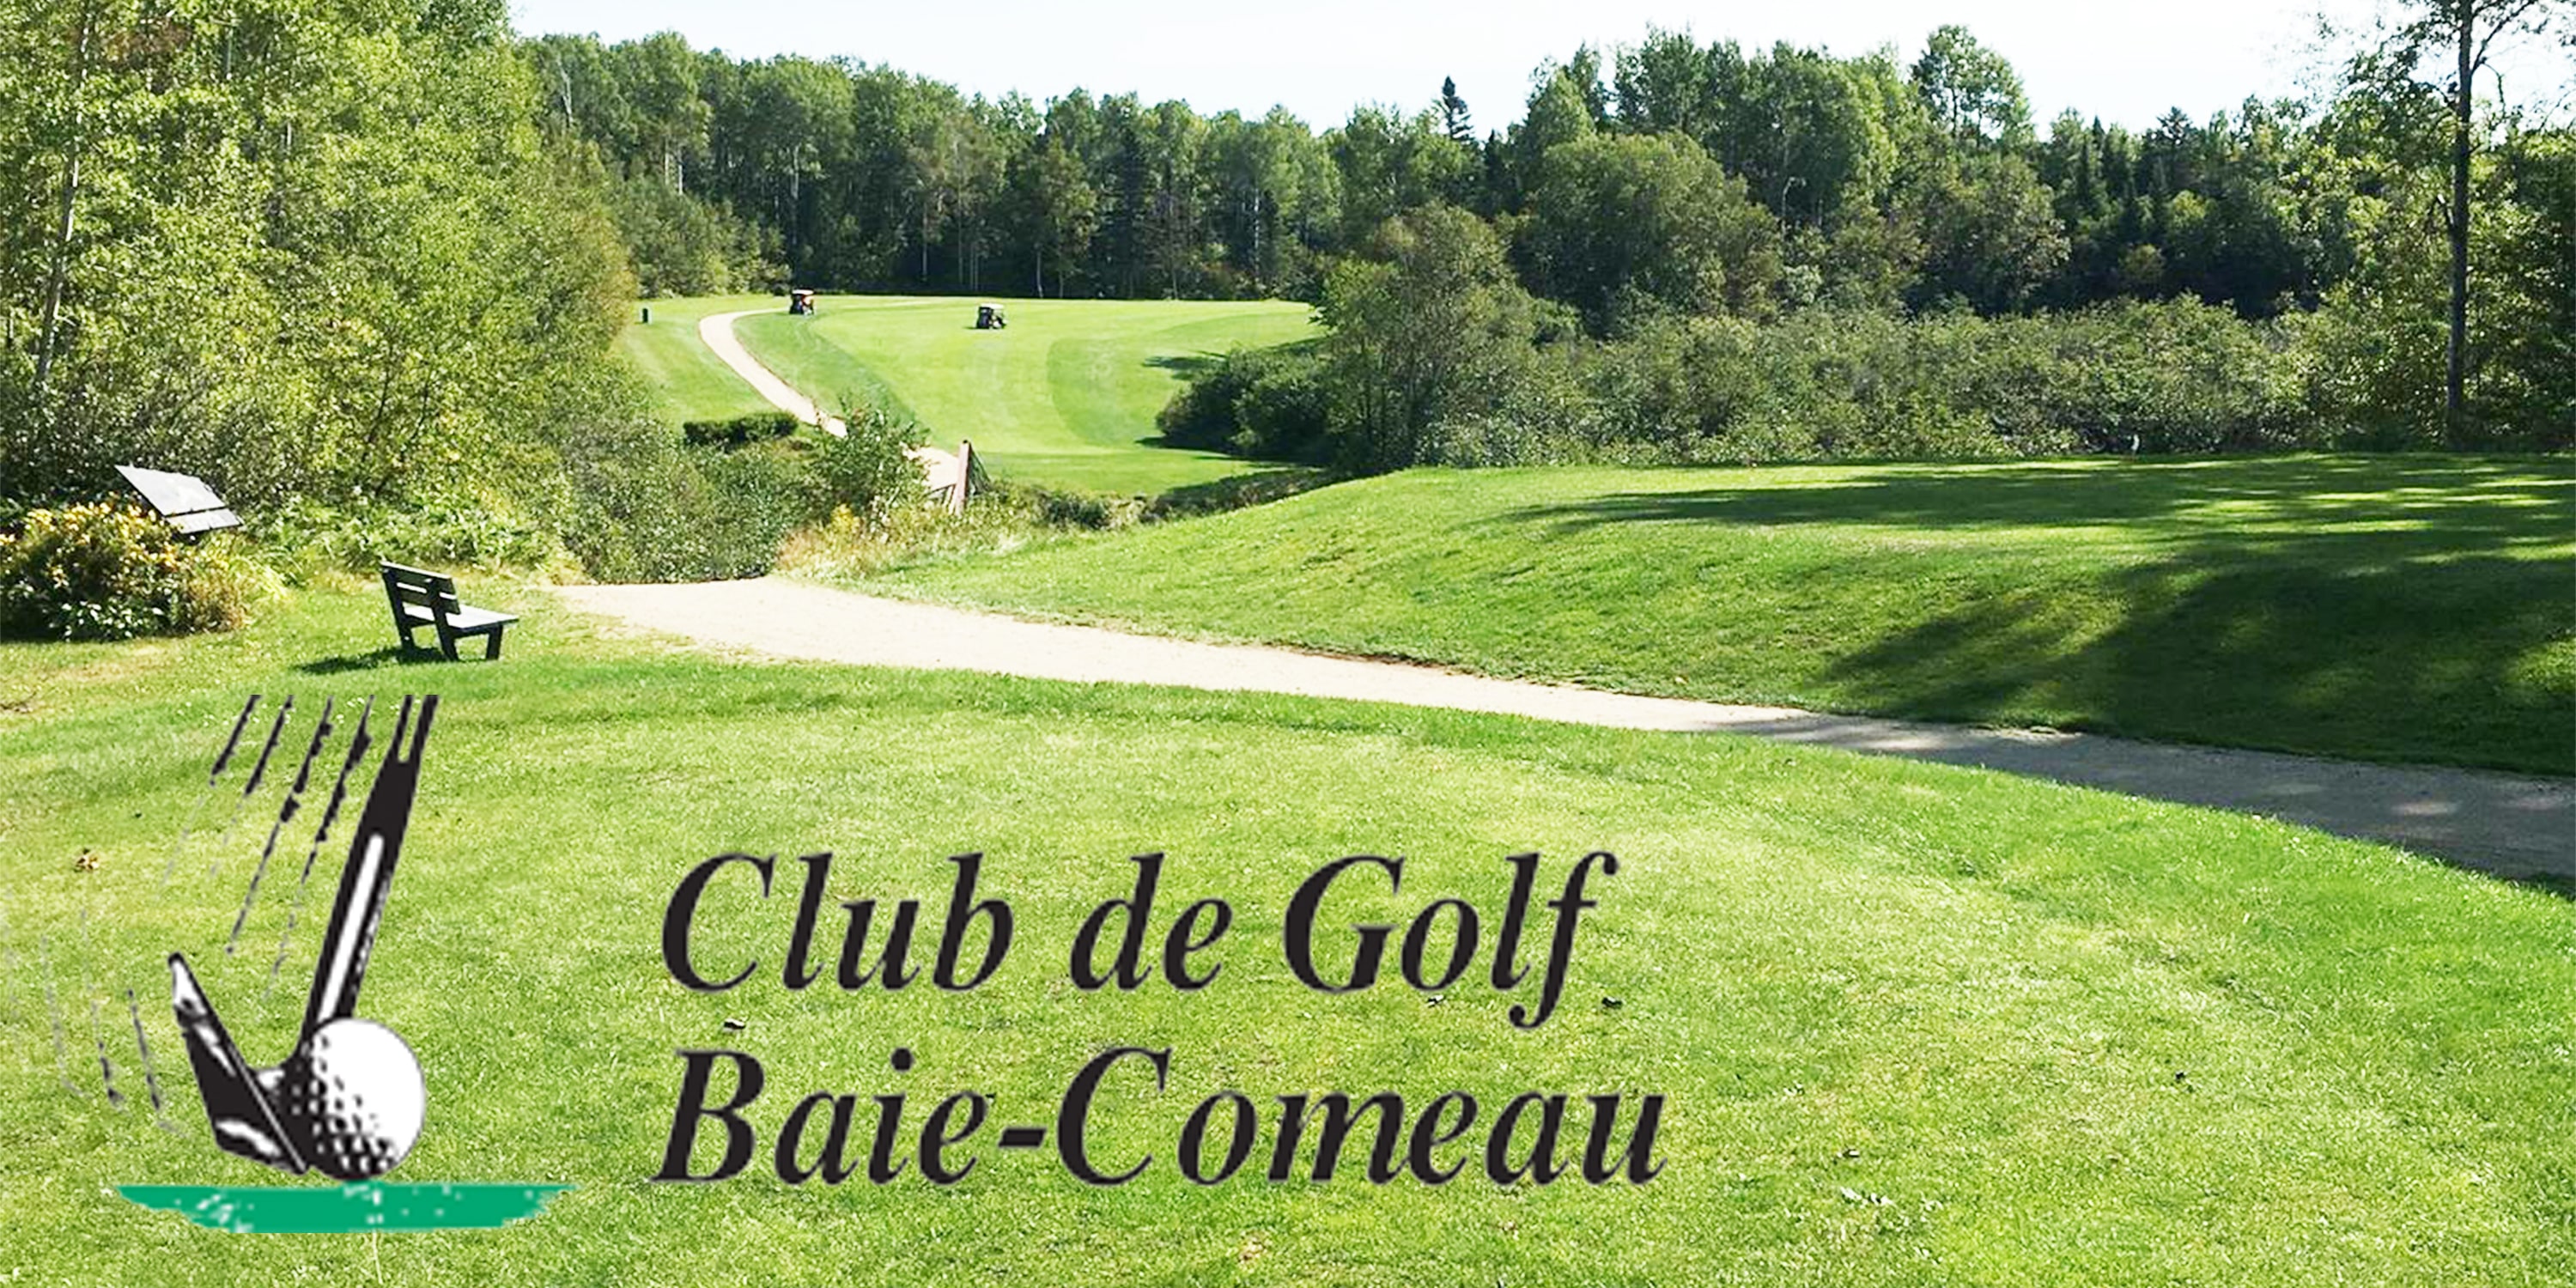 Club de Golf Baie-Comeau - A Challenge For All Golfers | golf software